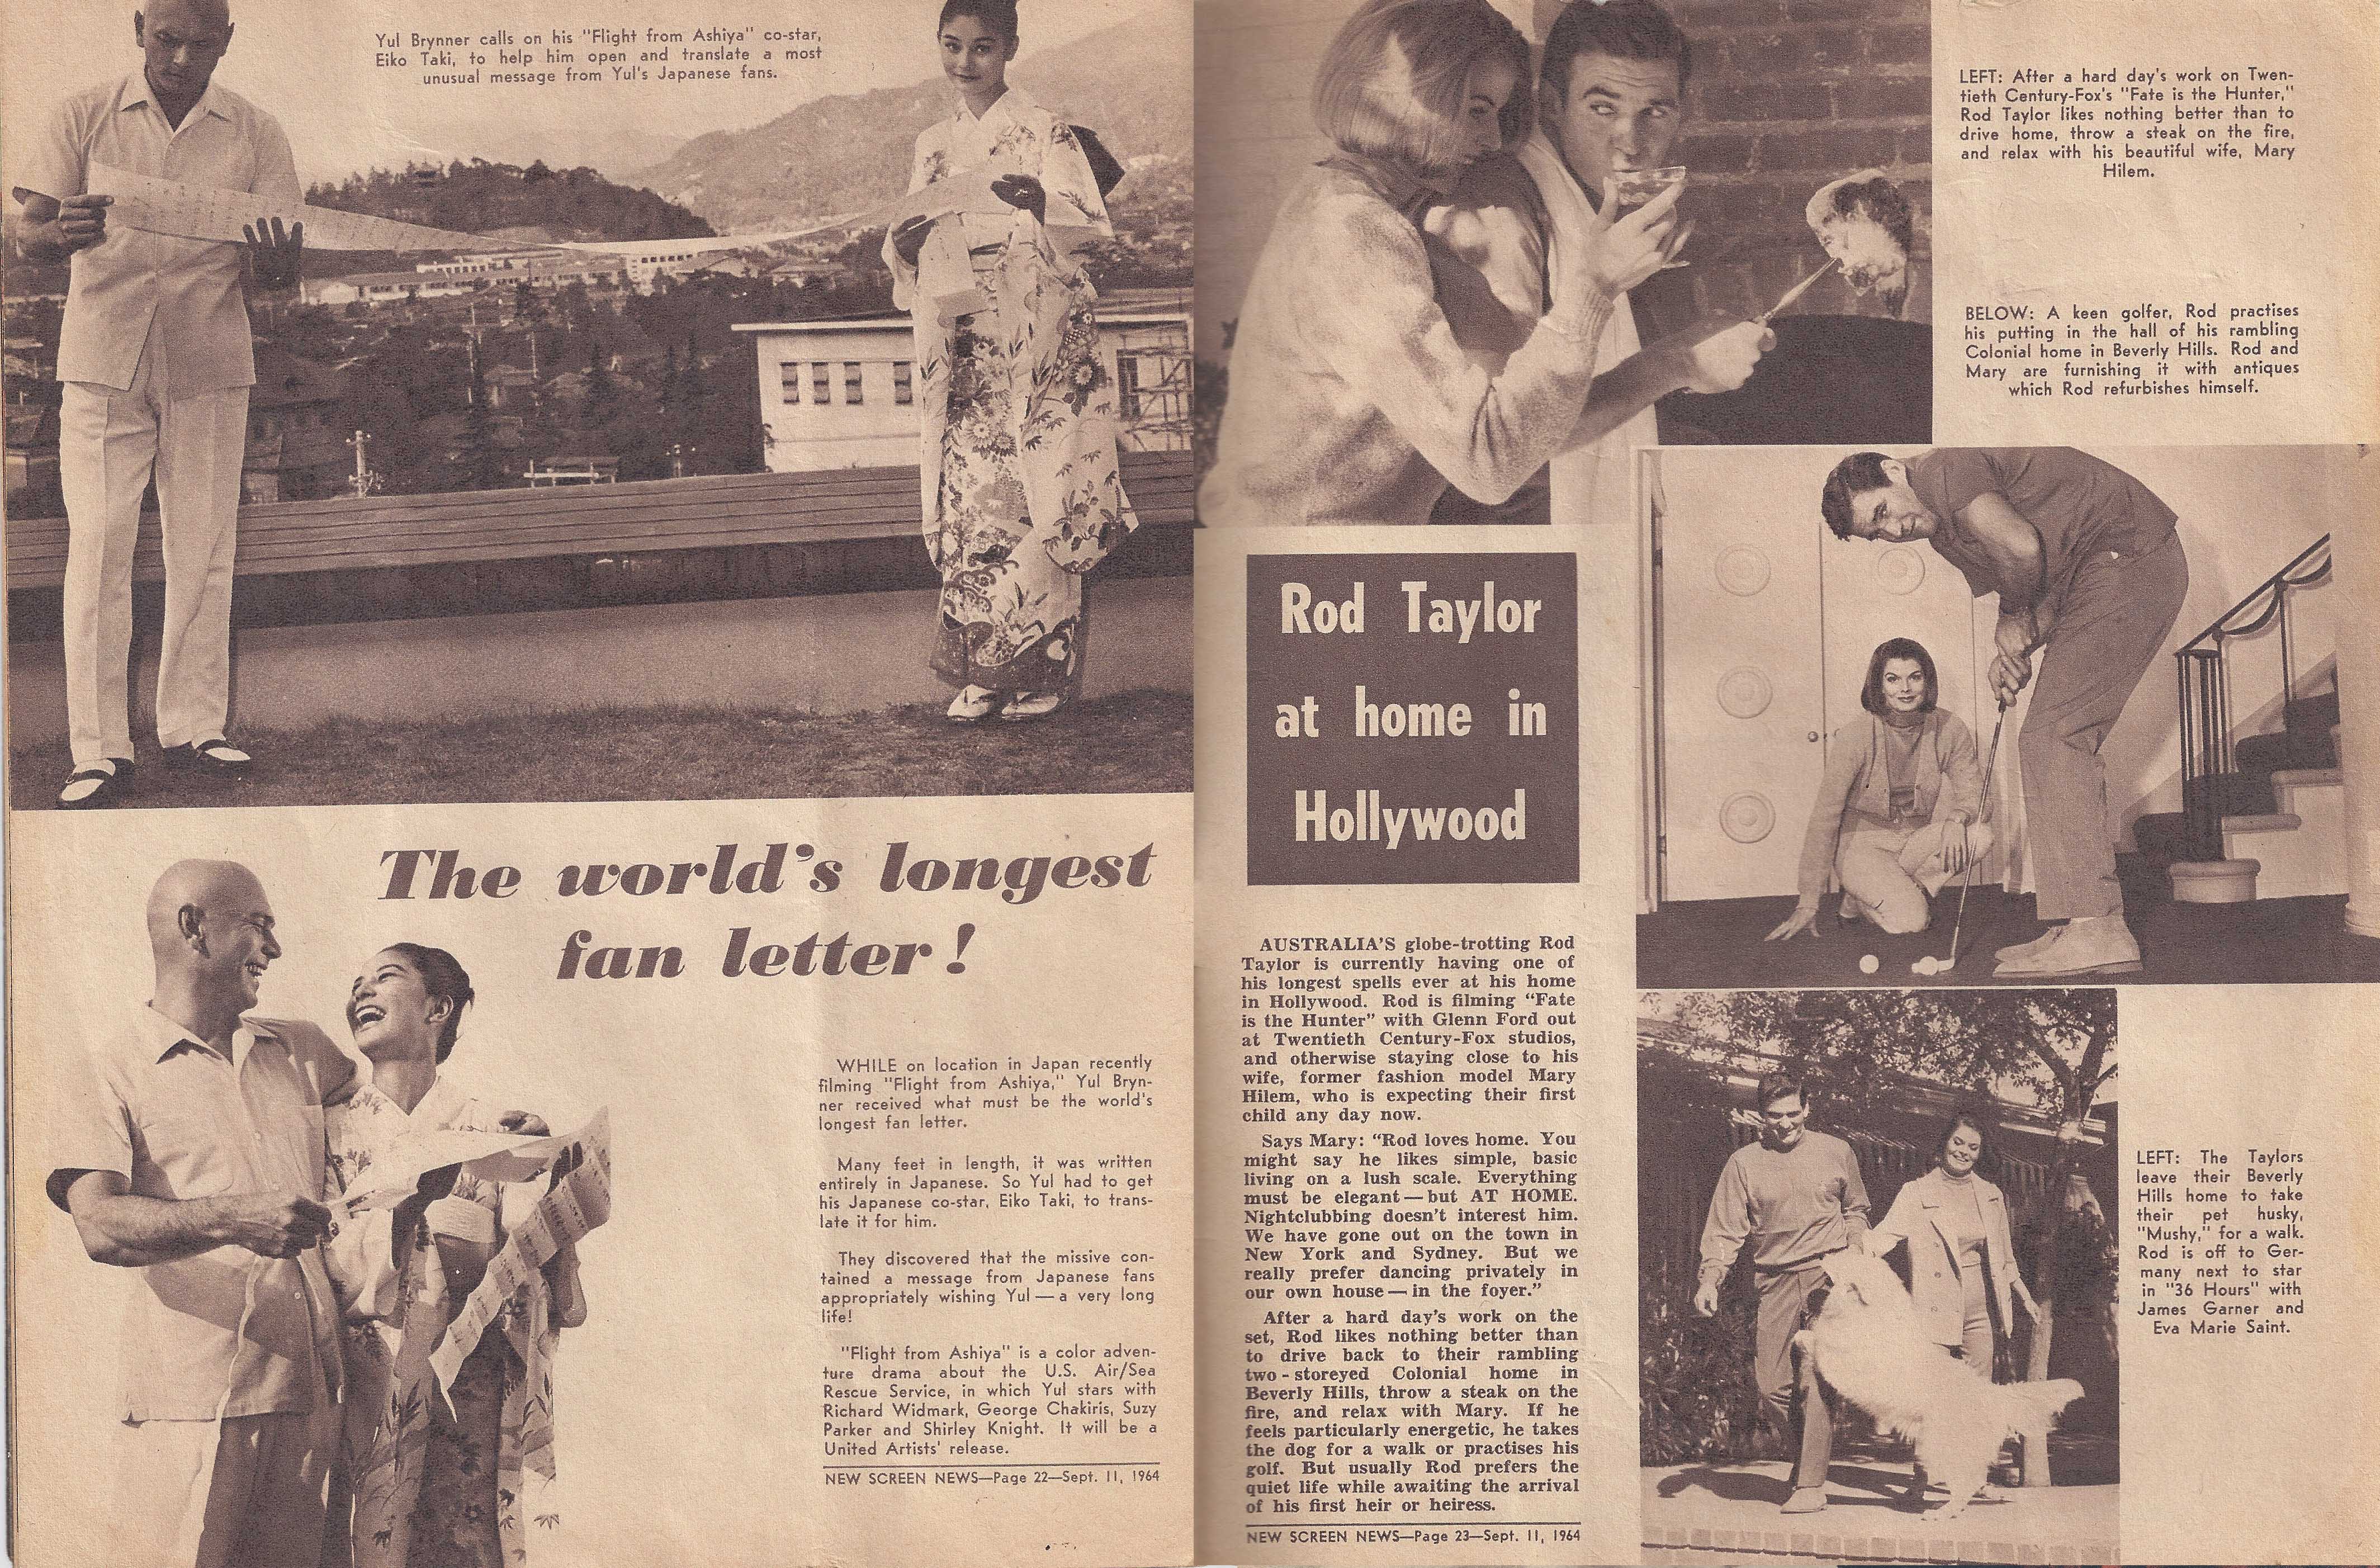 Screen News 19640911 - 12